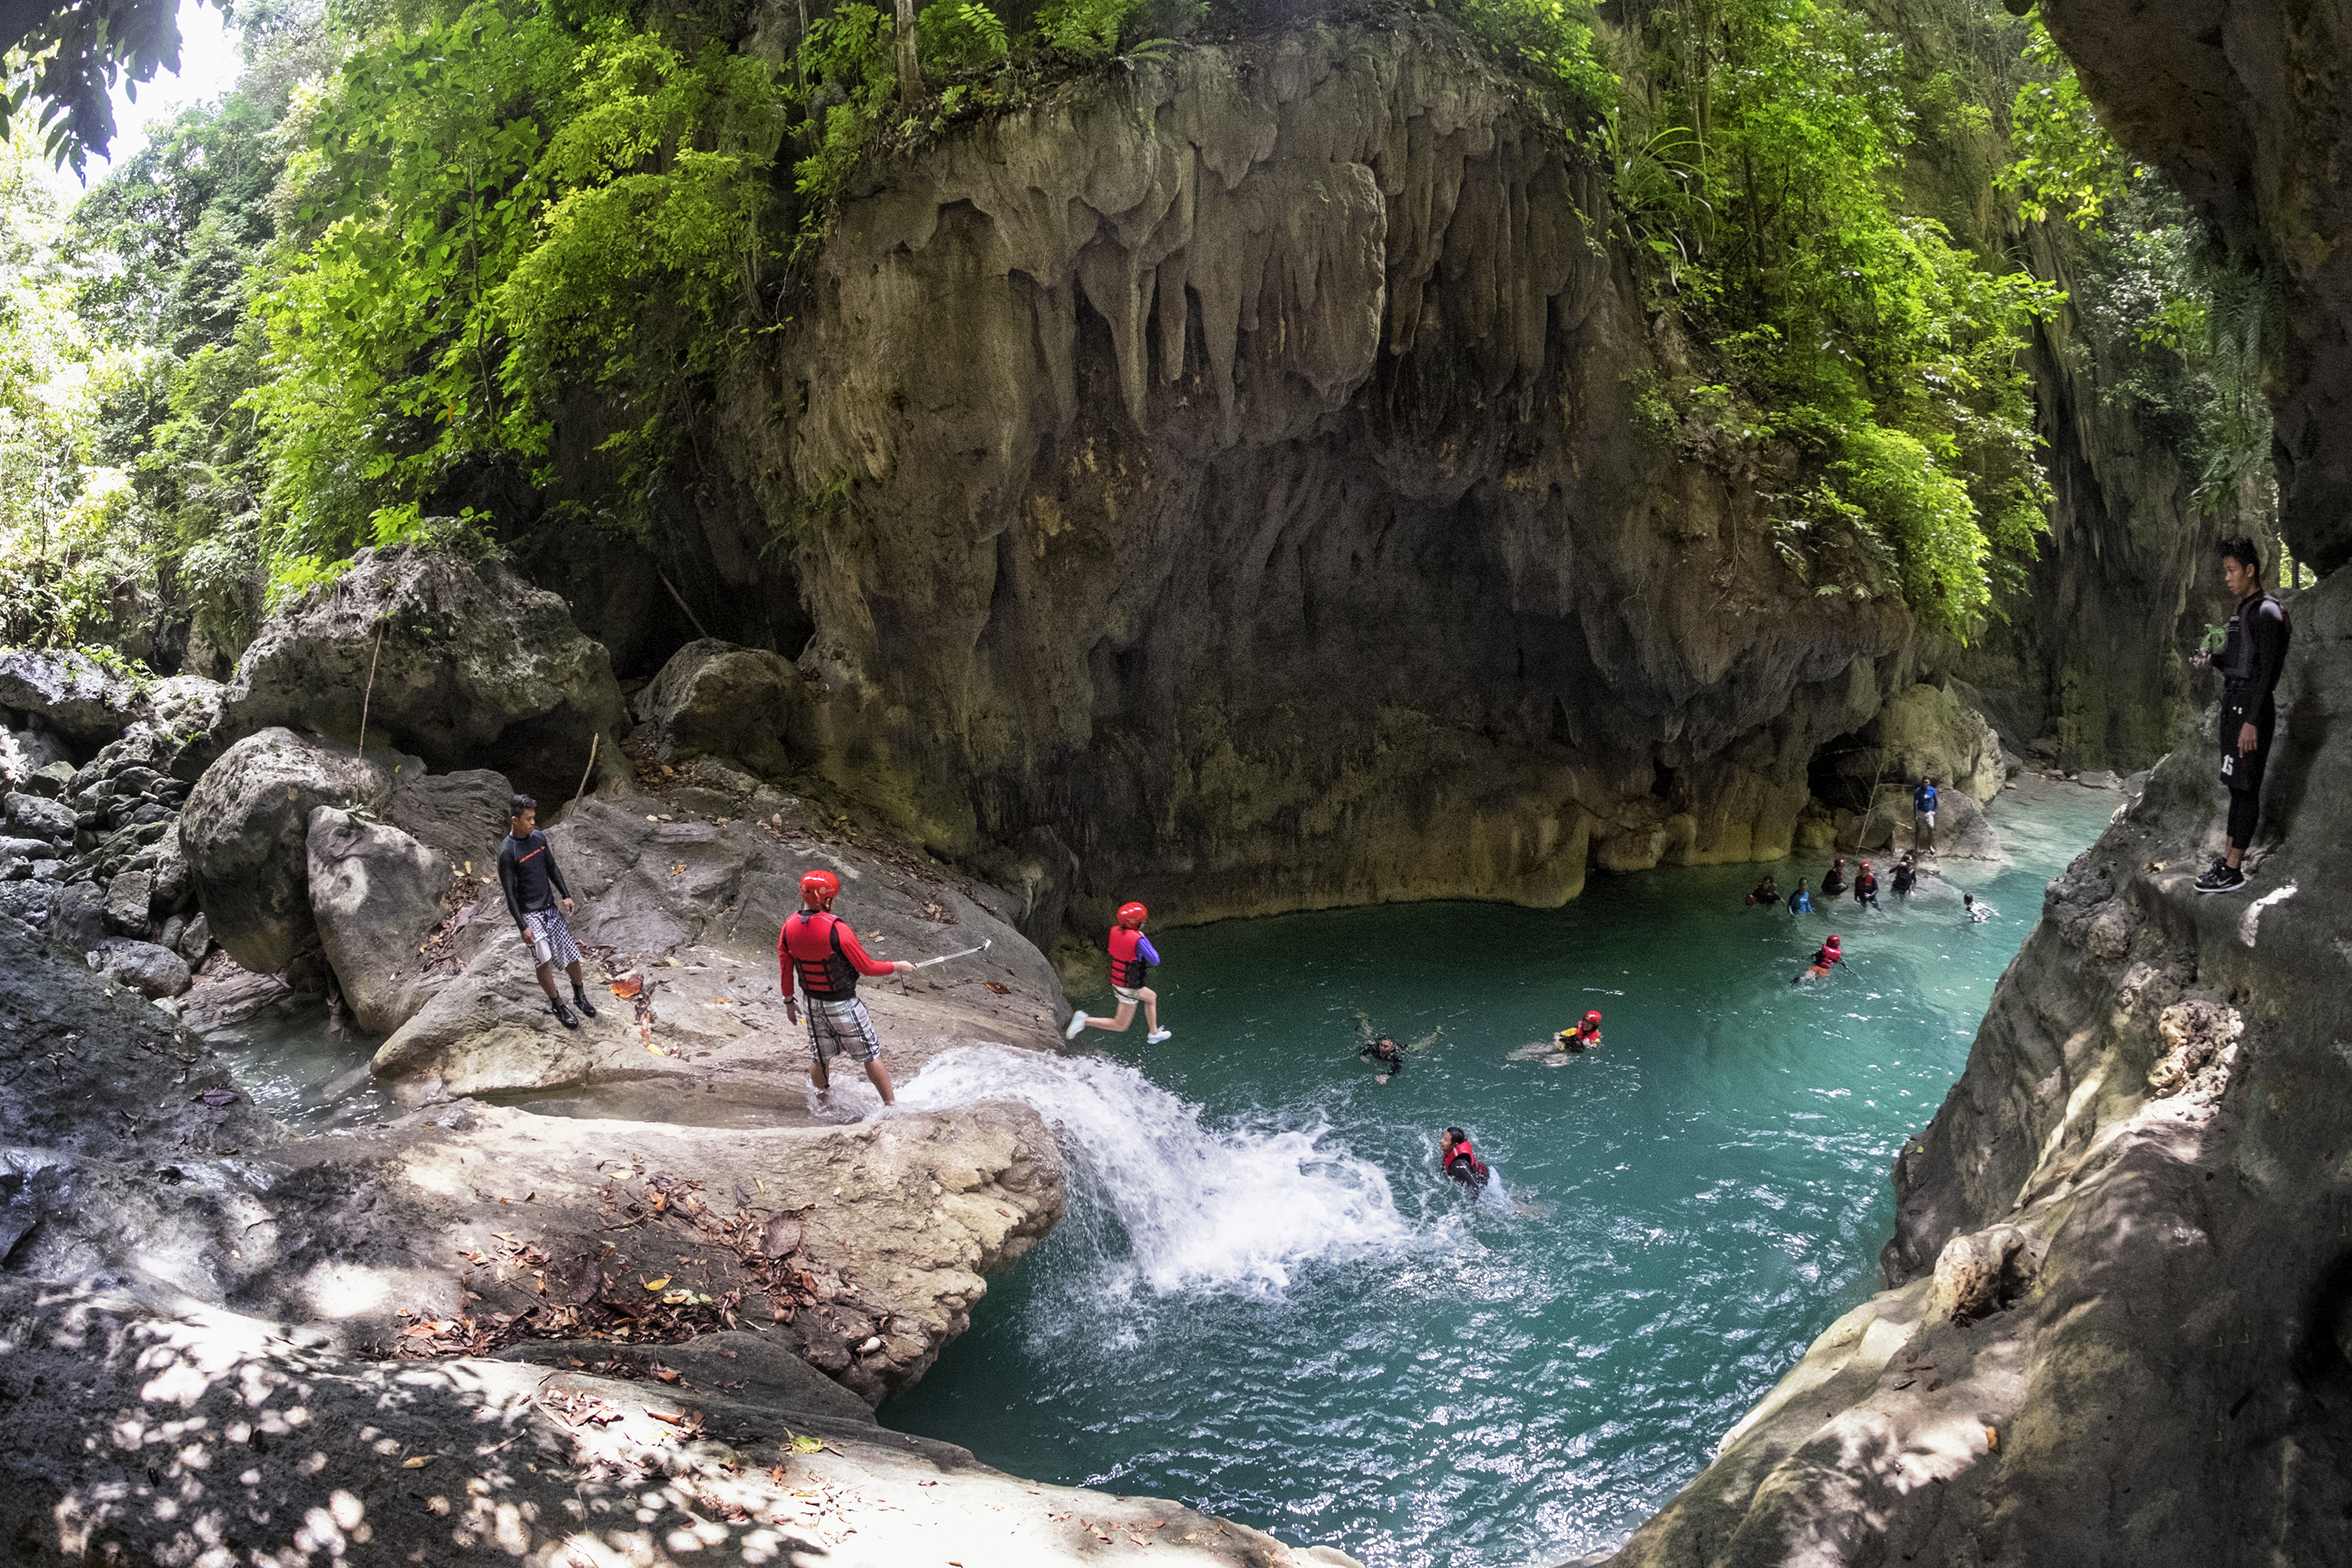 Tourists jumping in the waters of Kawasan Falls